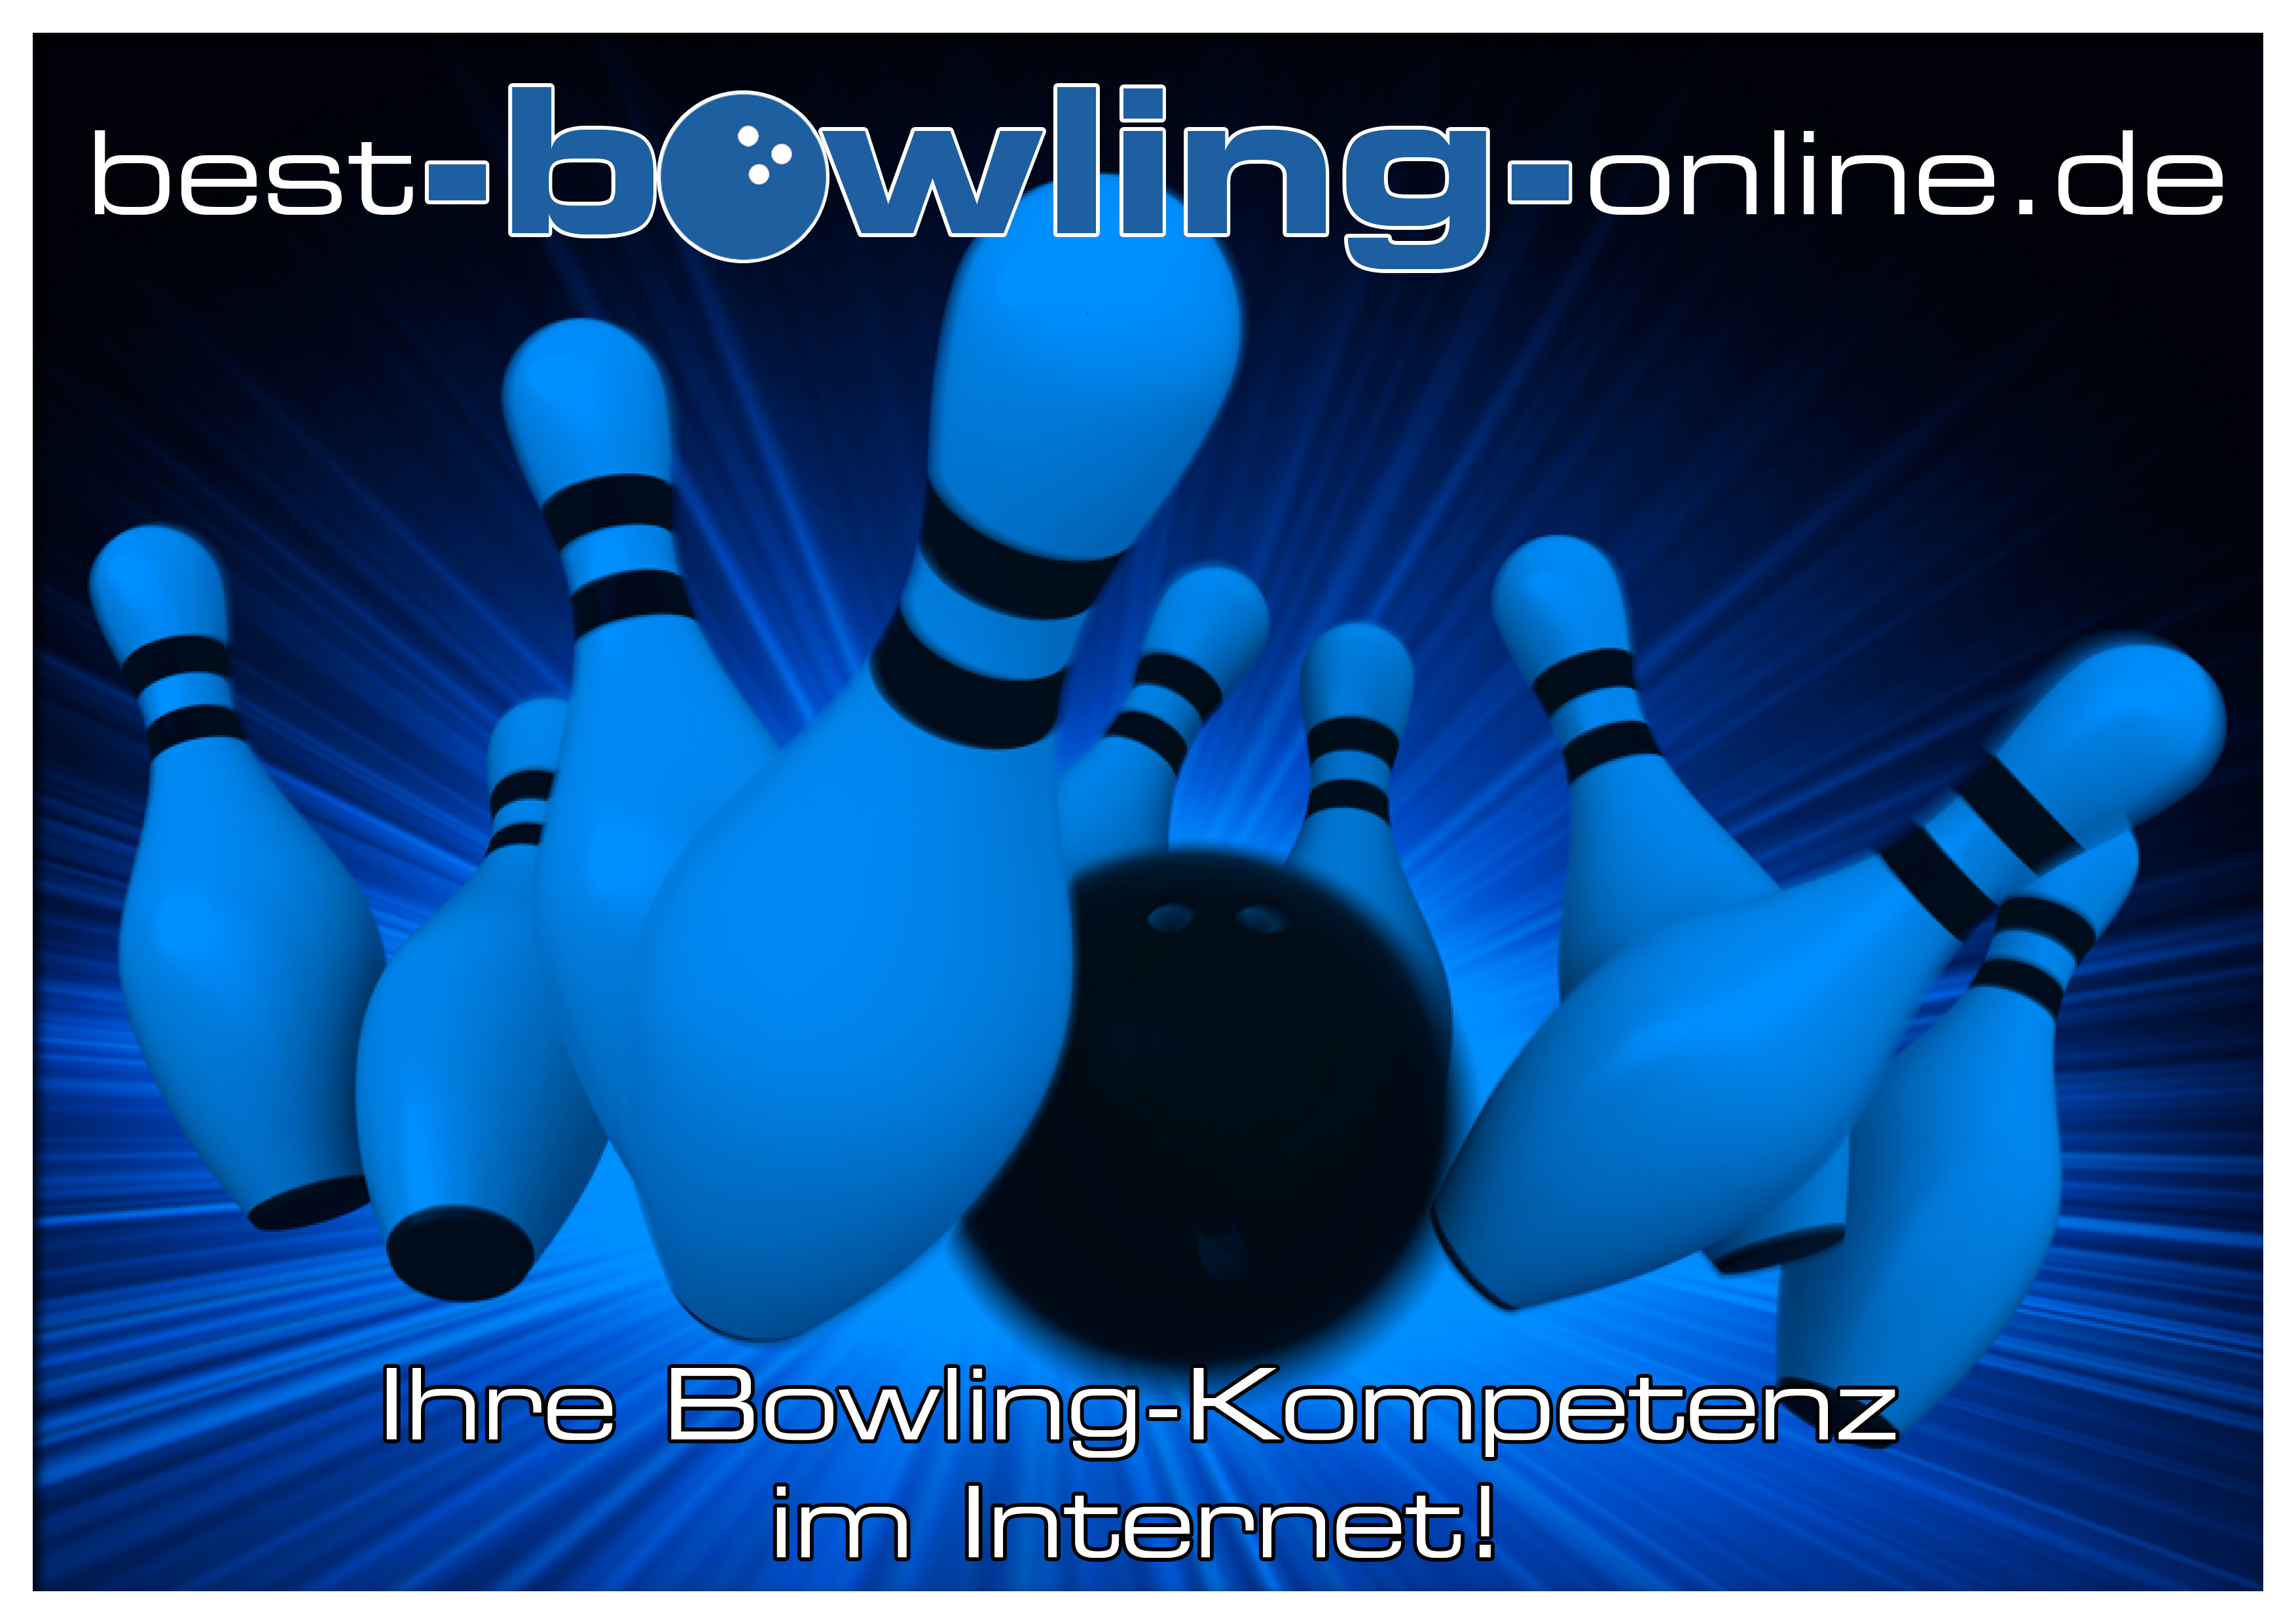 Best-Bowling-Online Bowling Online Shop